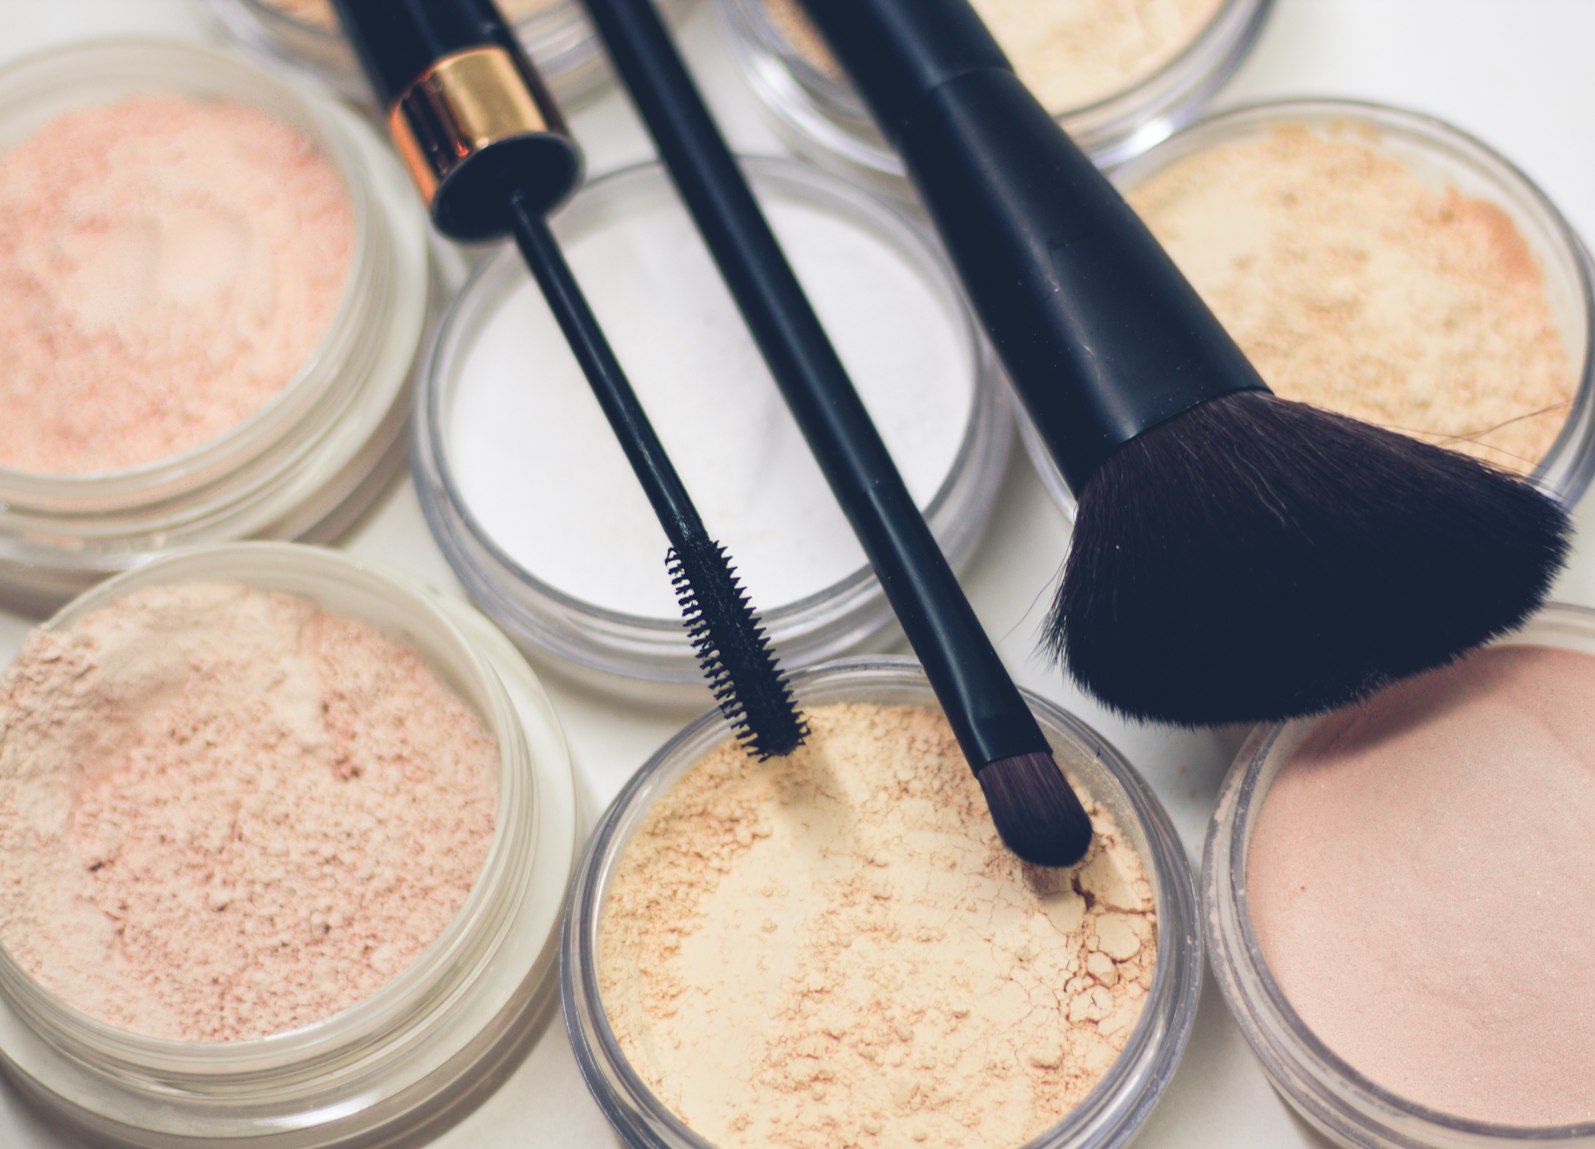 powders used for DIY makeup.